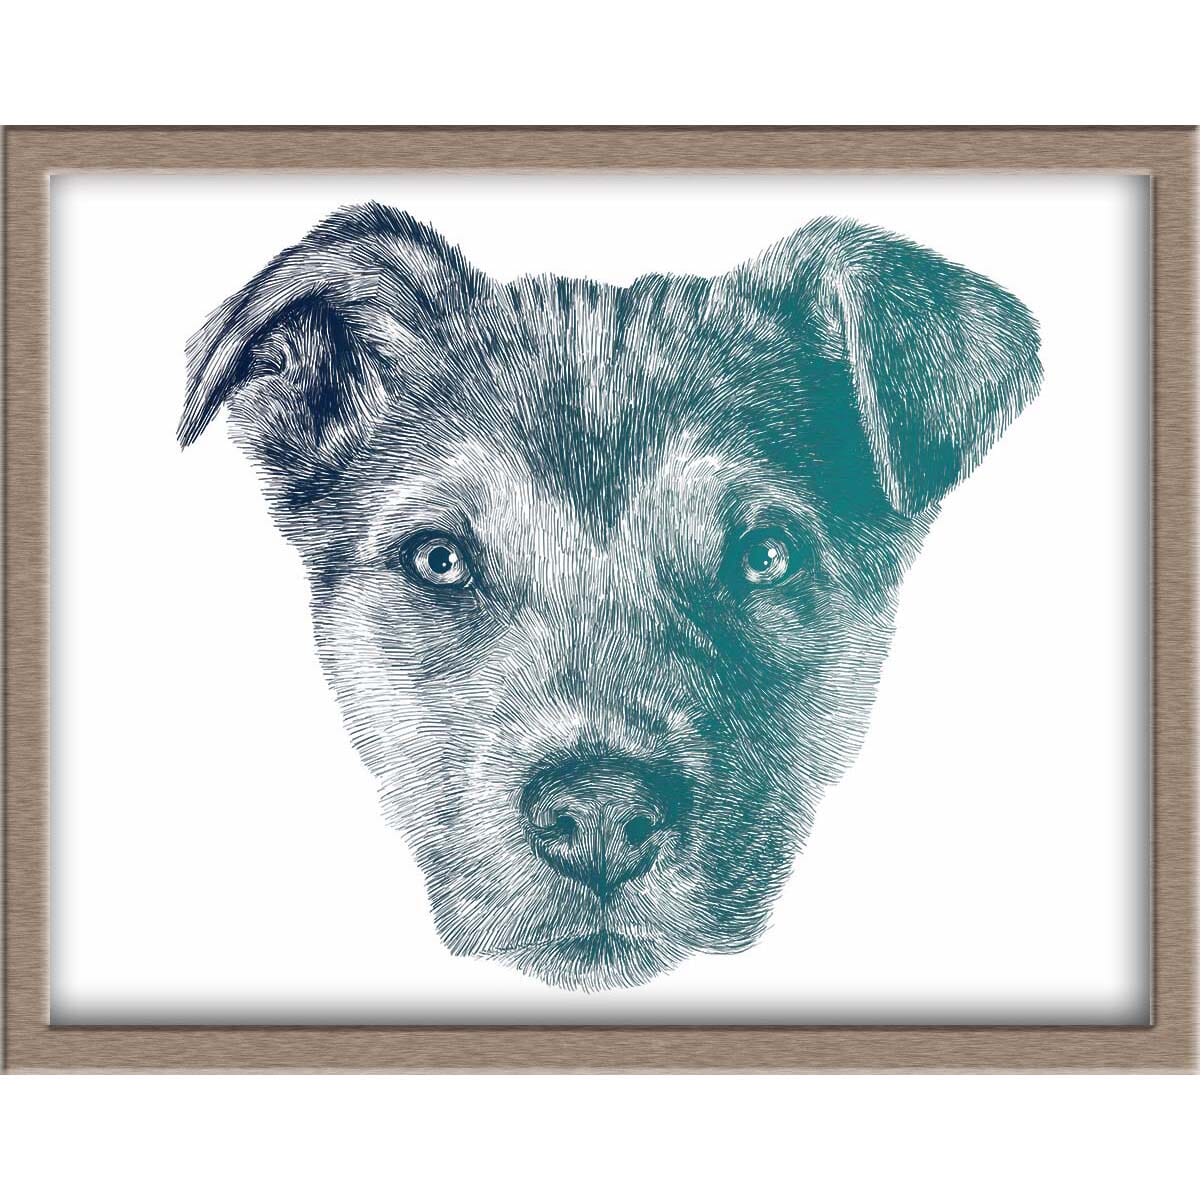 Puppy Dog Foiled Print (Riley) Posters, Prints, & Visual Artwork JoyousJoyfulJoyness 